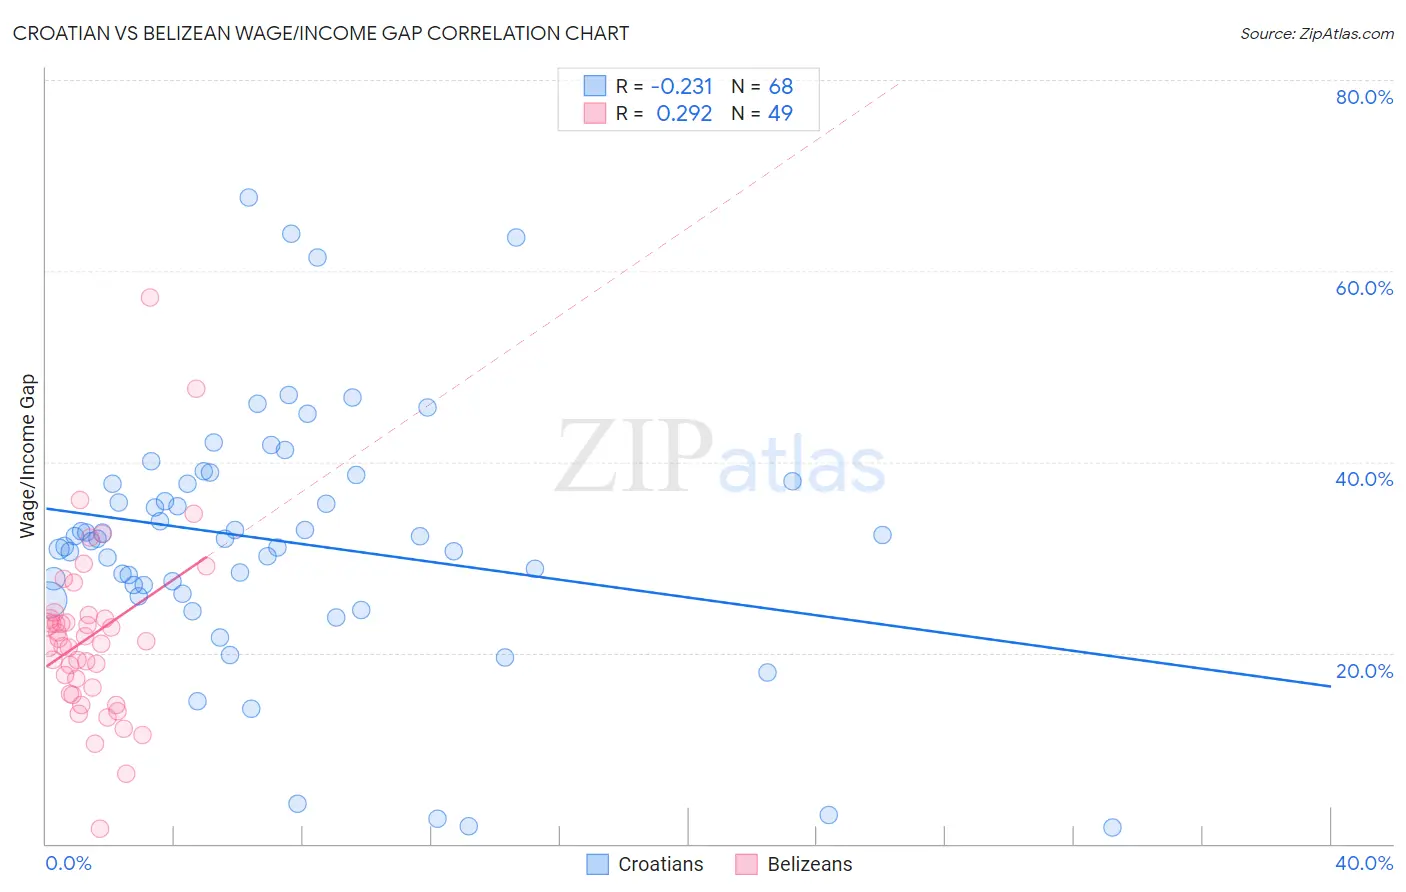 Croatian vs Belizean Wage/Income Gap